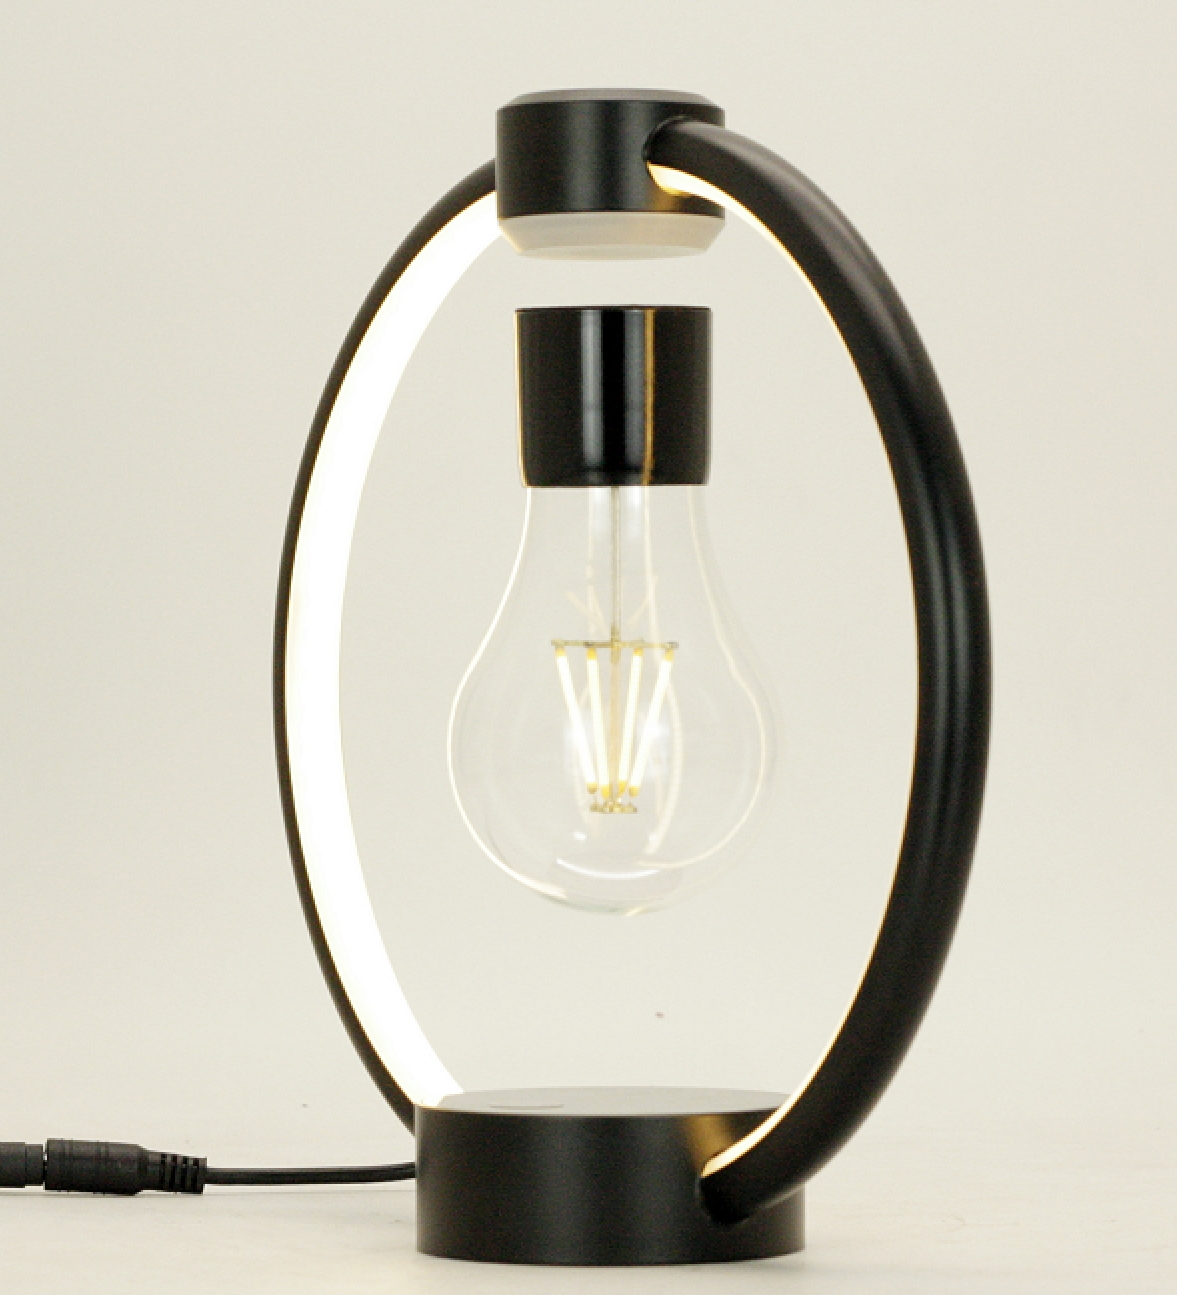 PA-1006 metal frame magnetic levitation floating lamp light bulb for decor gift home 